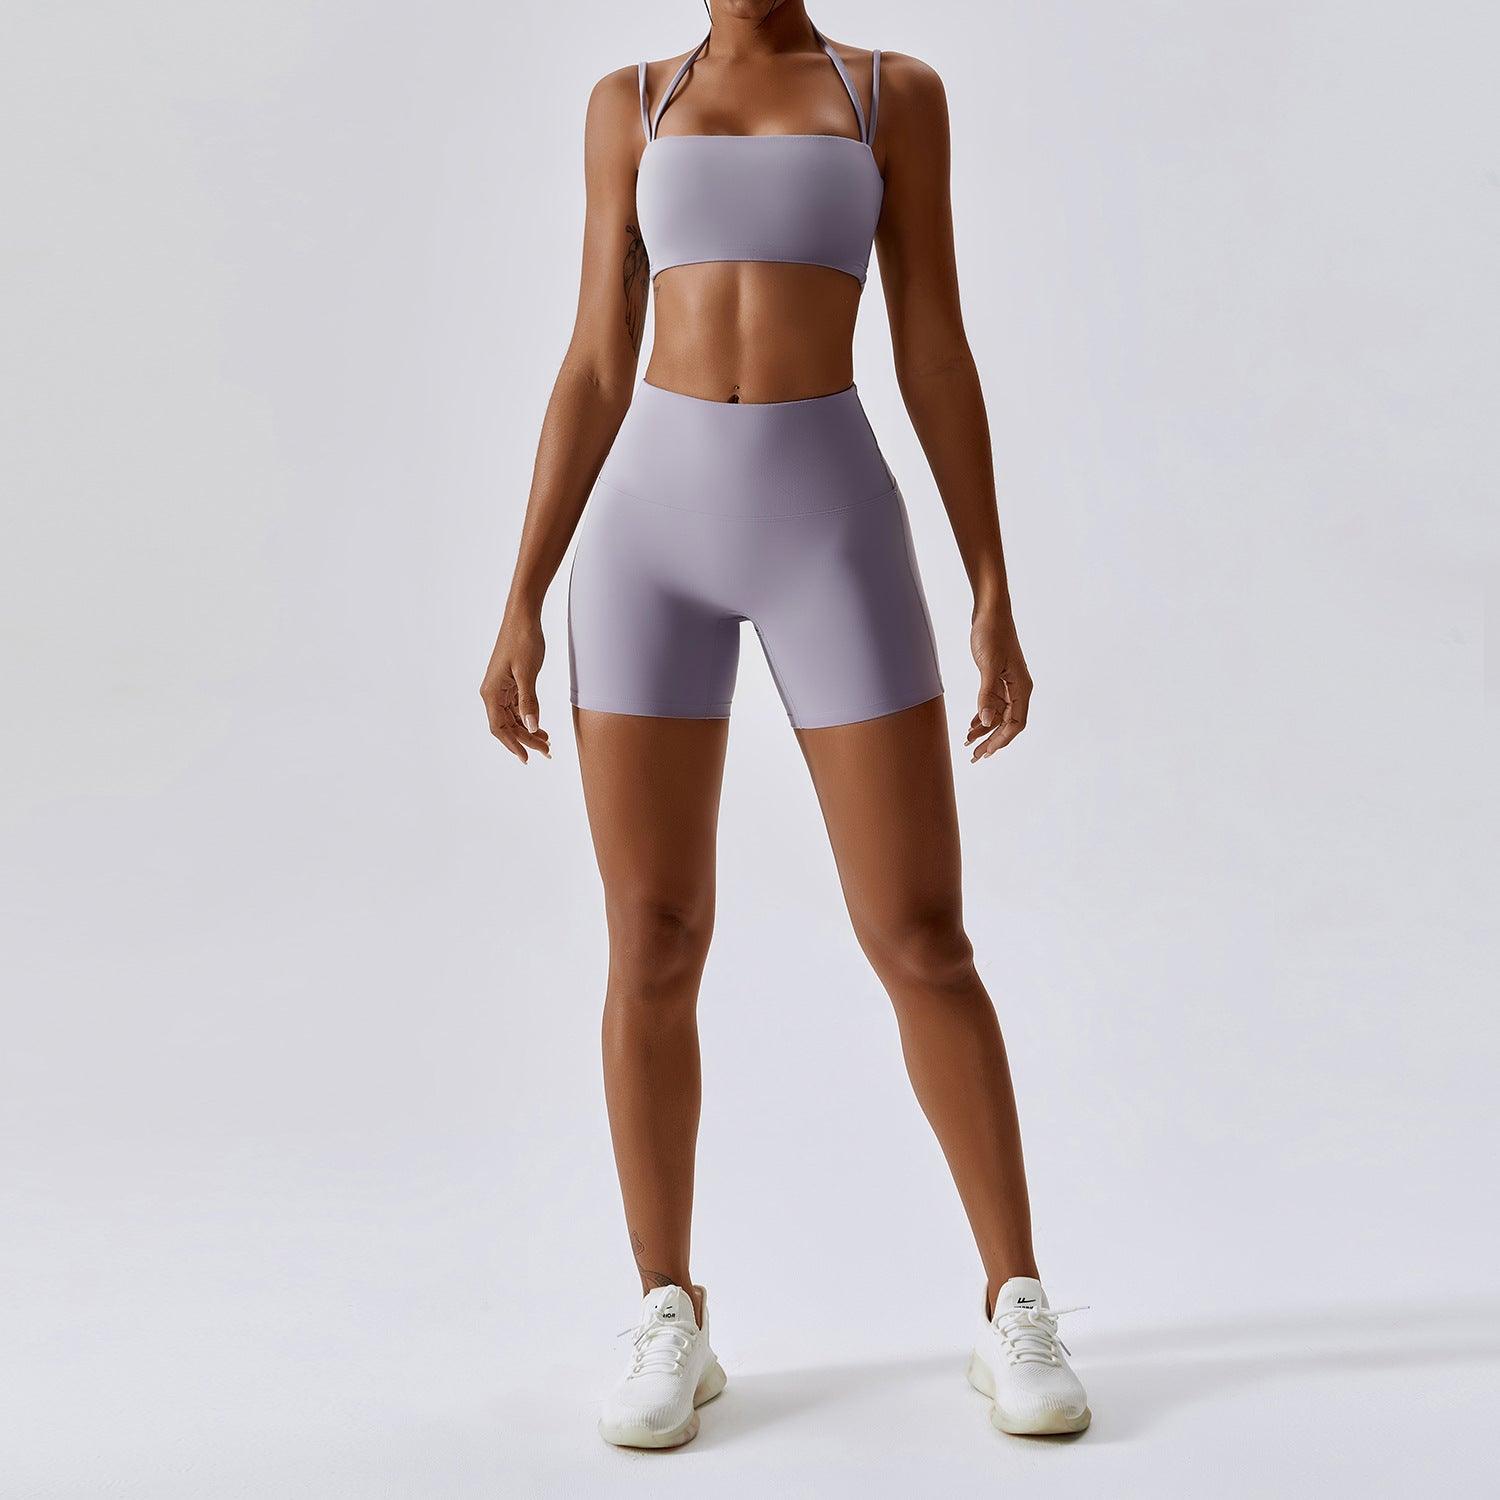 Gymshark Sweatpants Size Medium - Gem